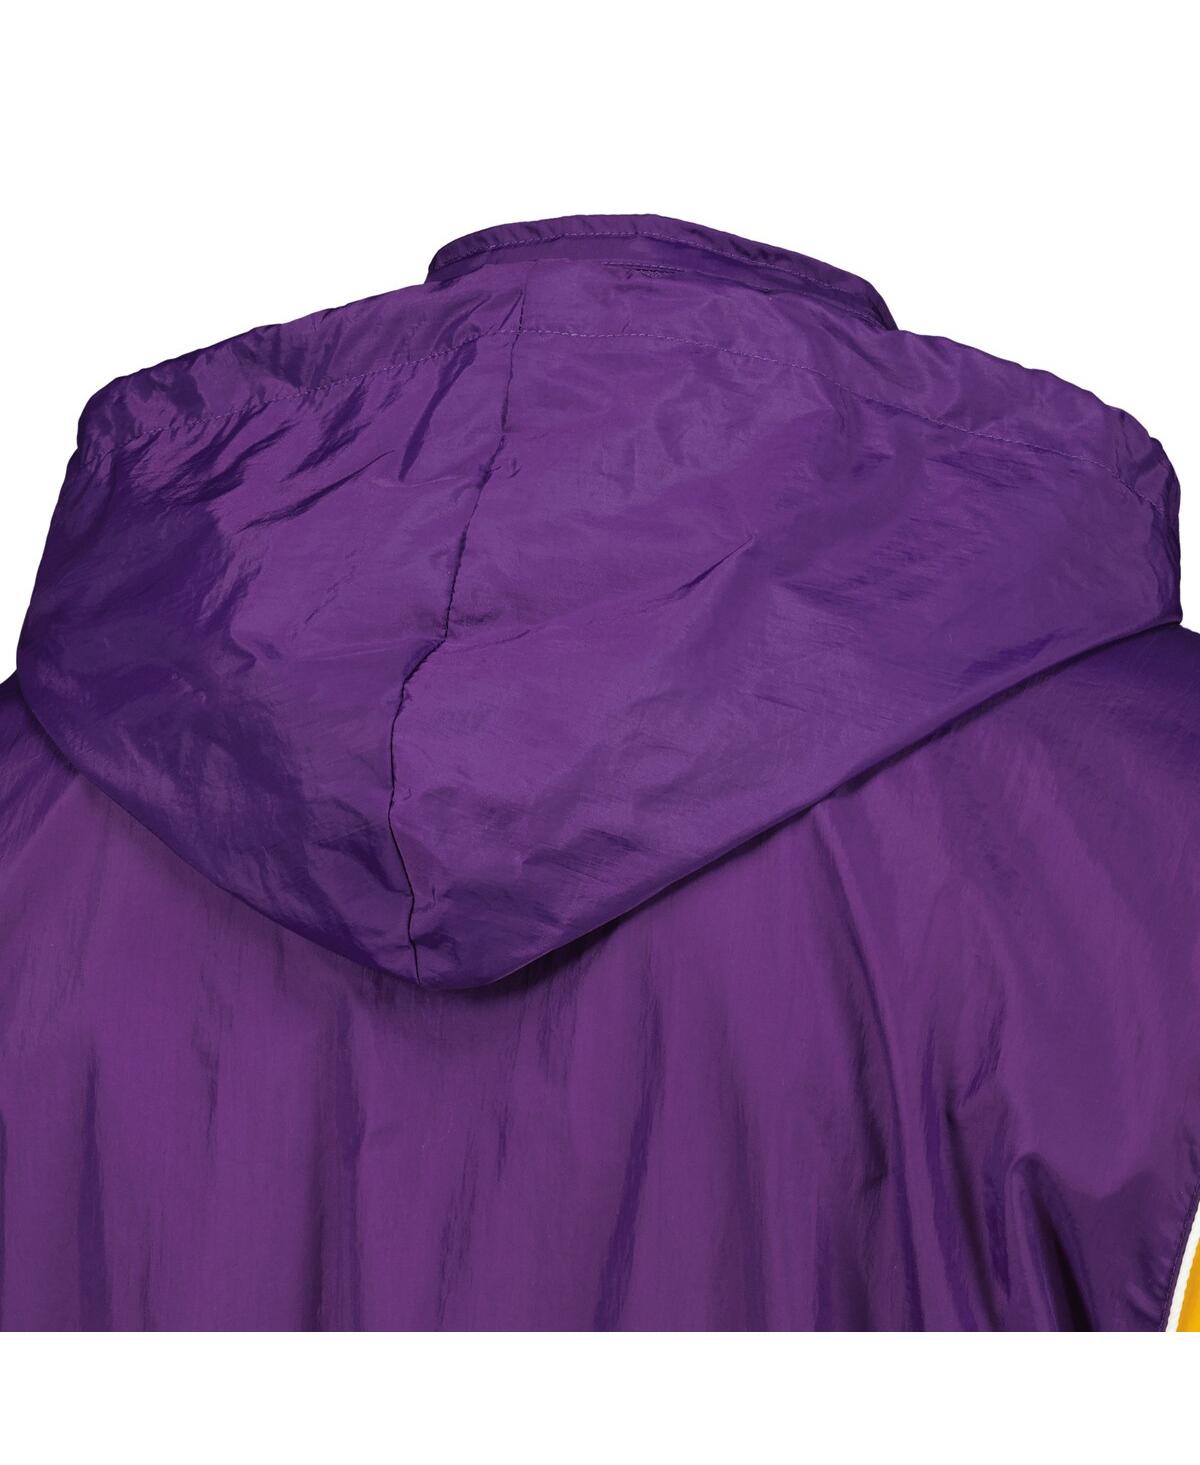 Shop Mitchell & Ness Men's  Purple Distressed Minnesota Vikings 1992 Sideline Full-zip Jacket